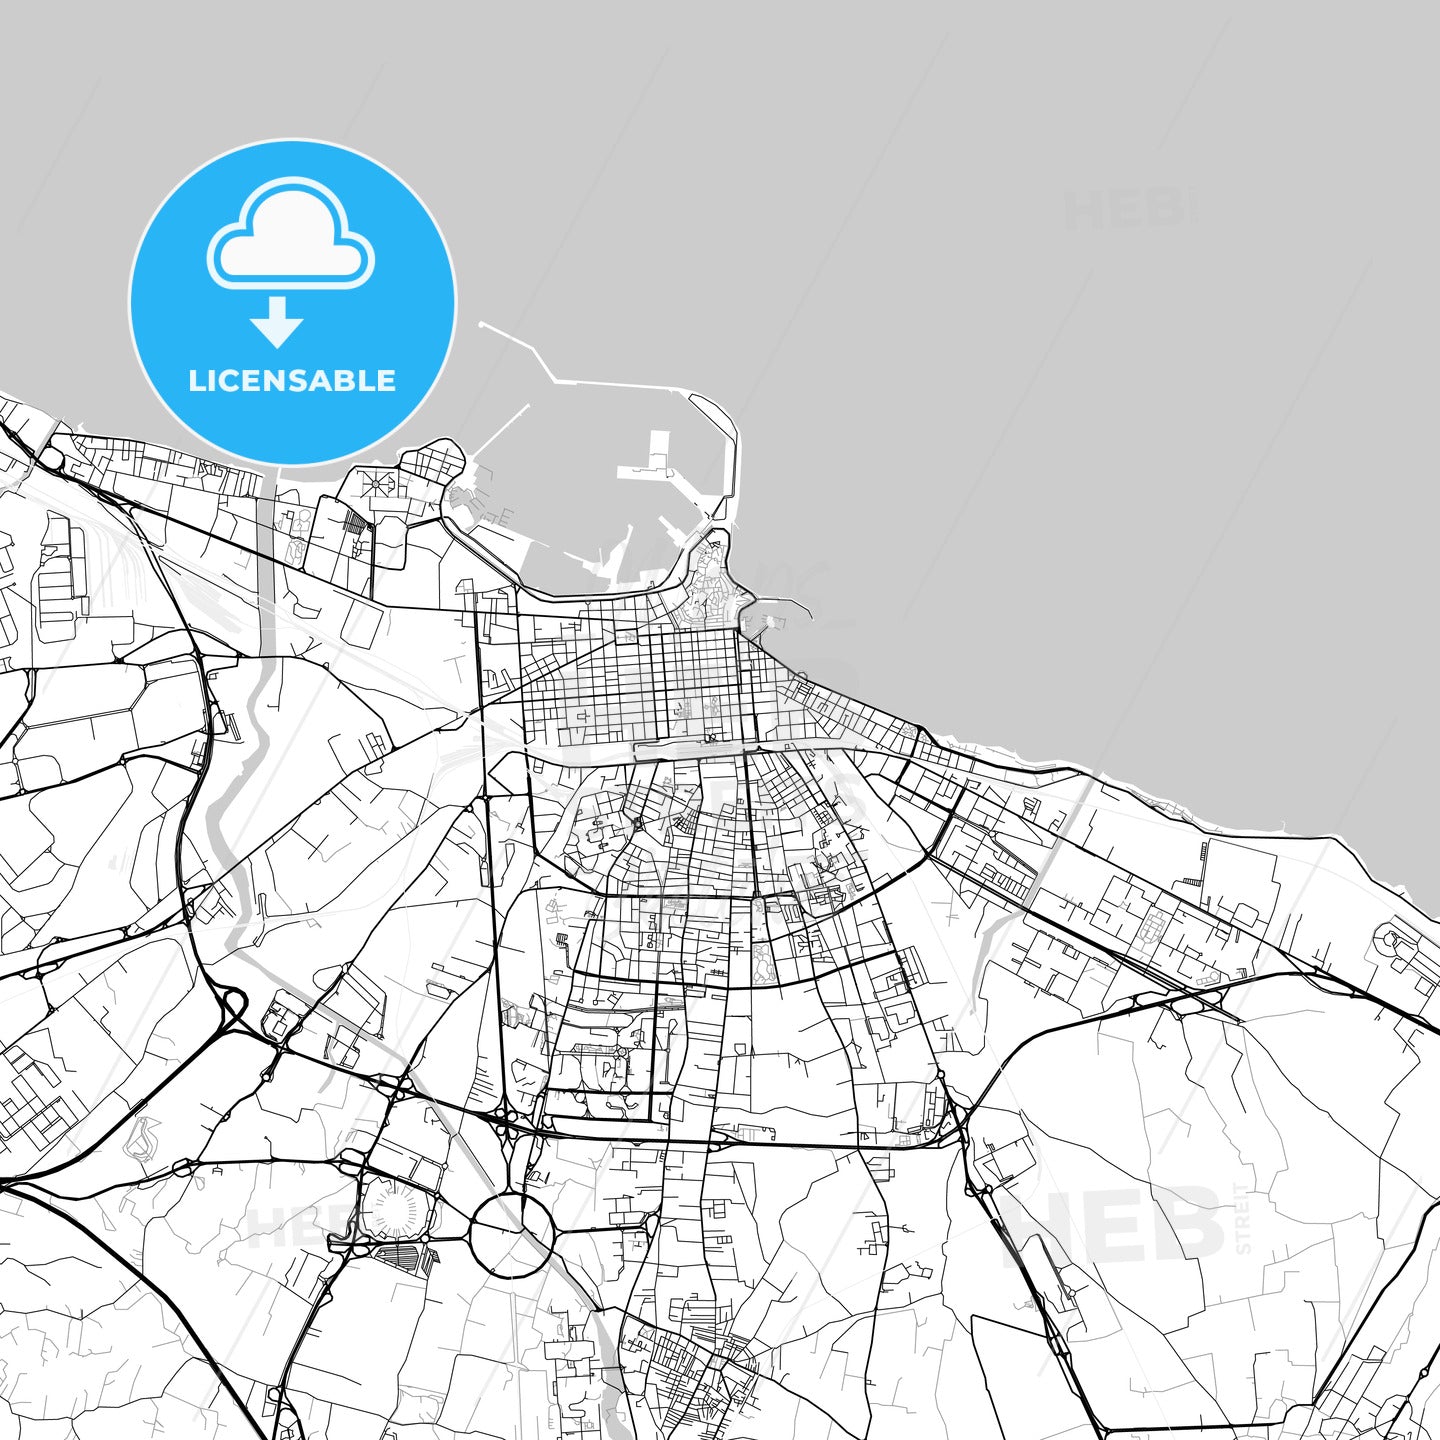 Bari, Apulia, downtown map, light